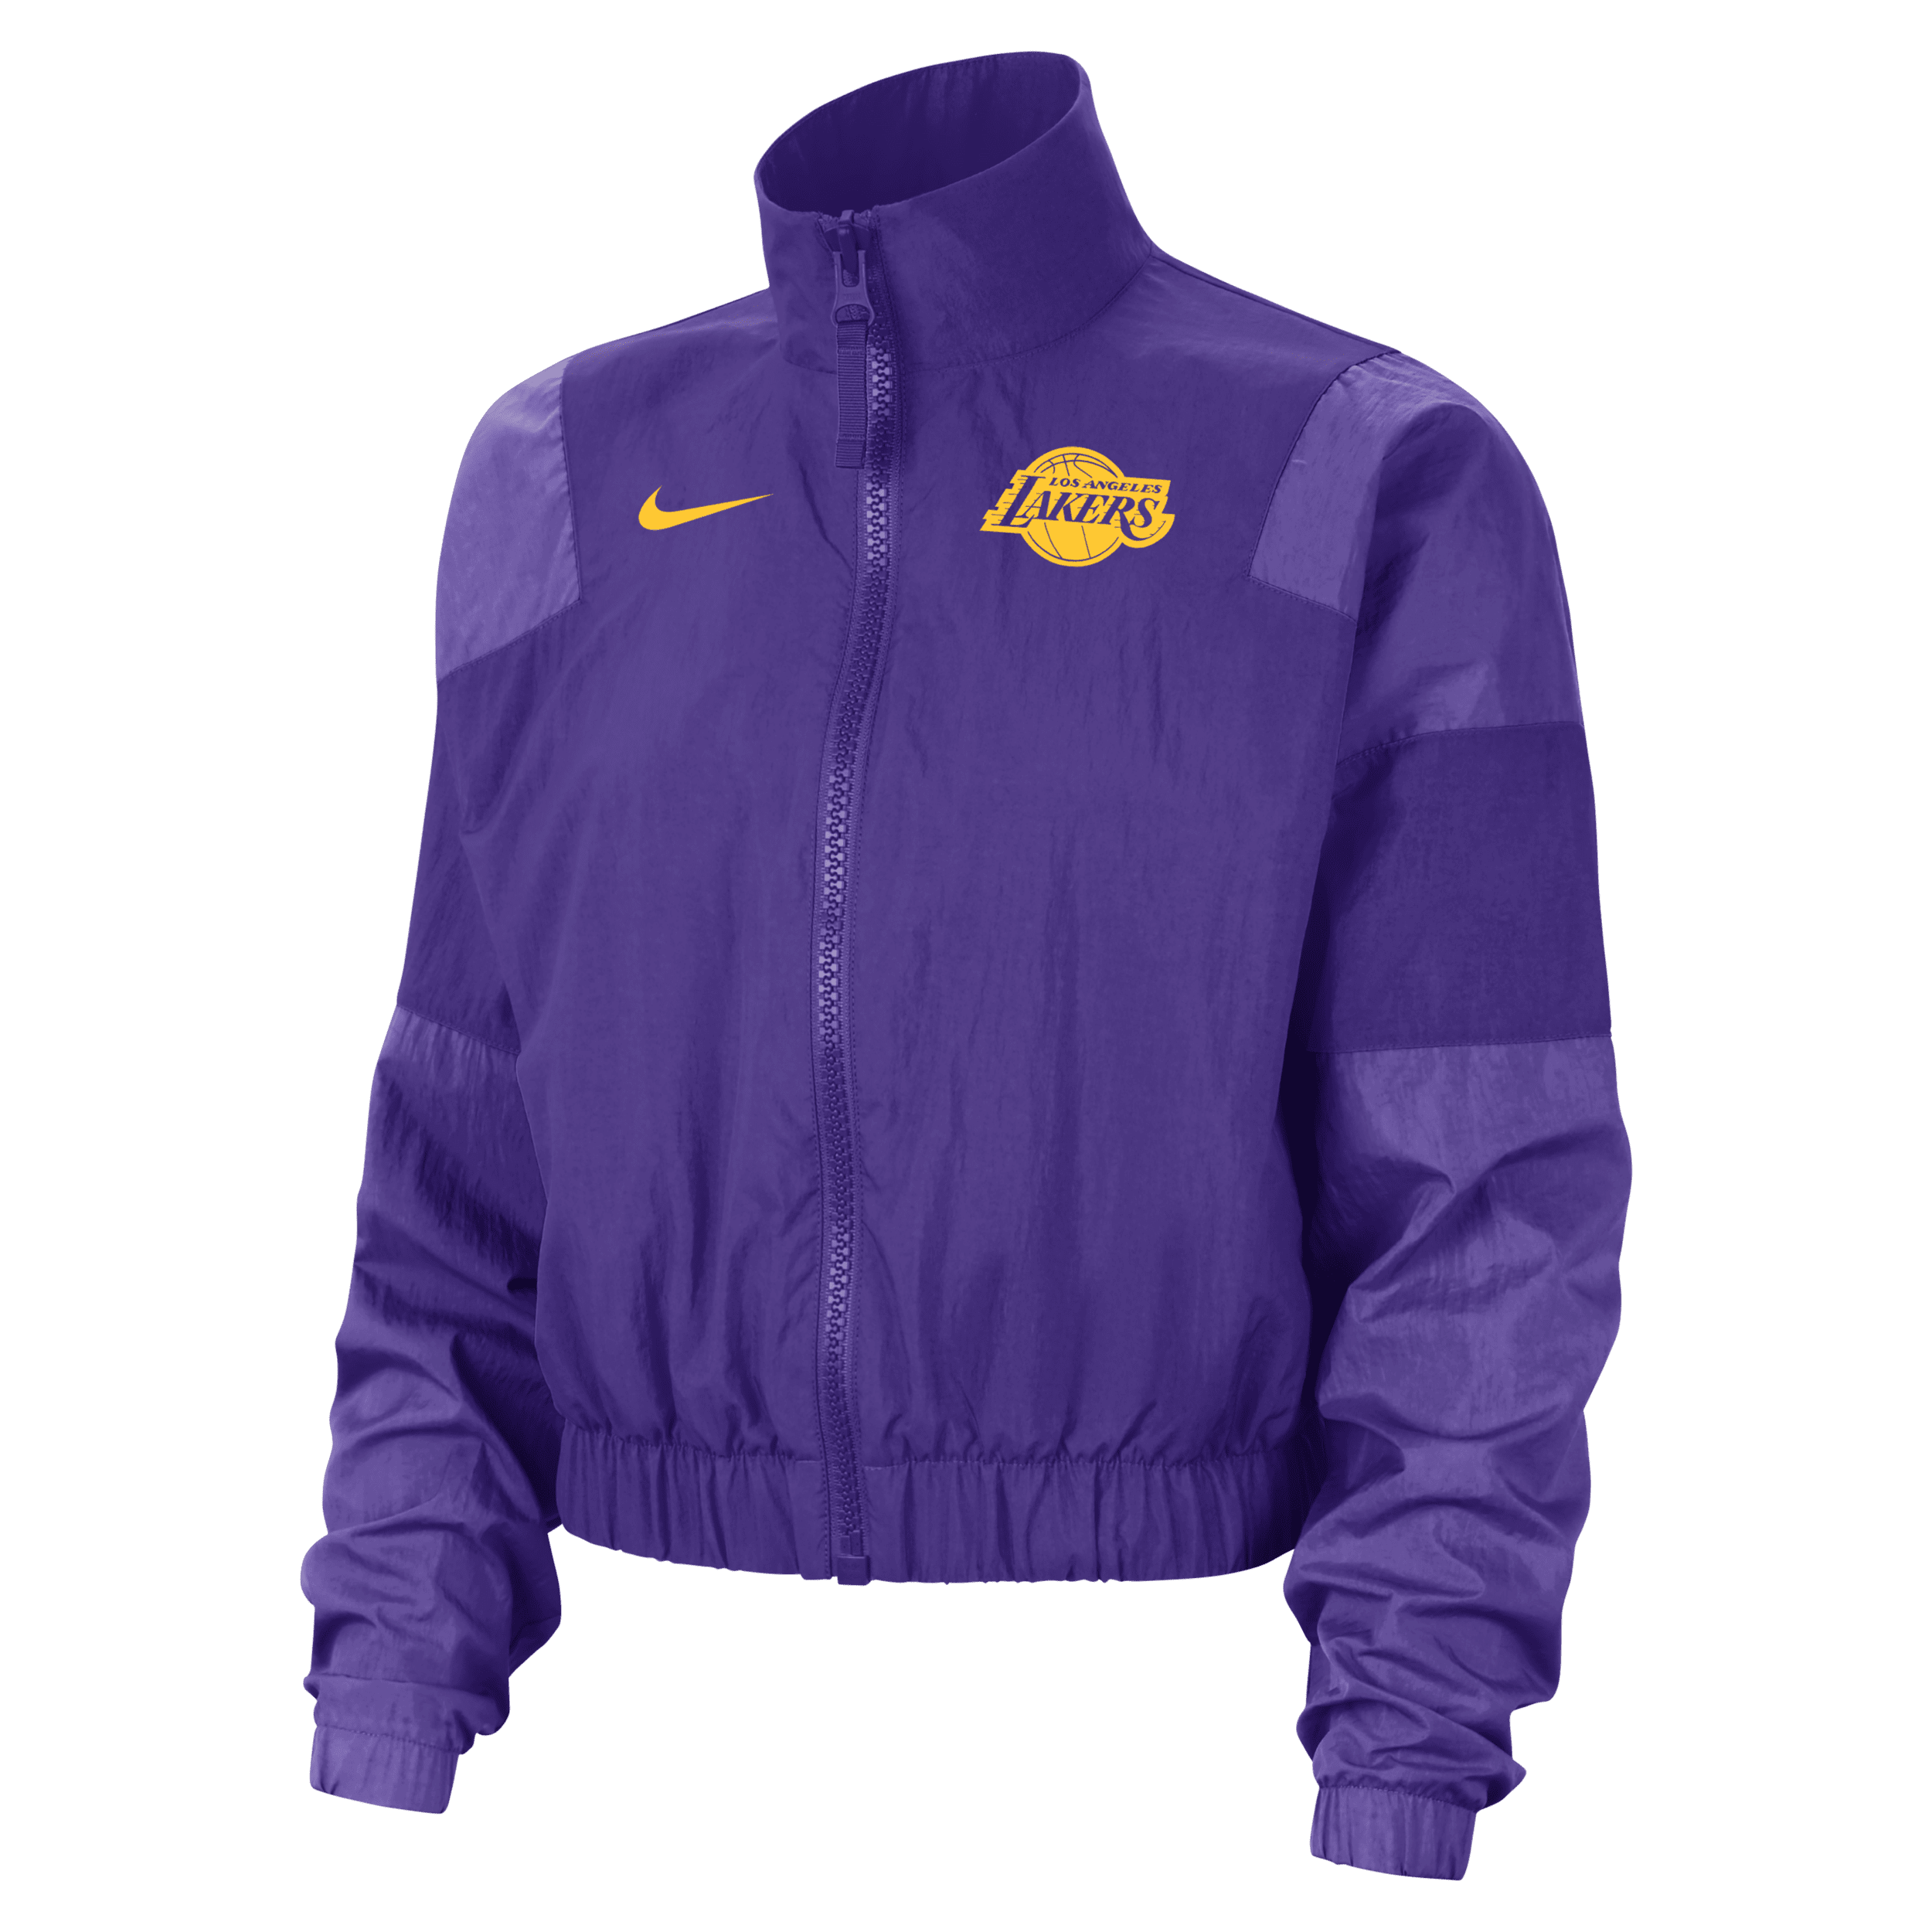 Los Angeles Lakers Nike Courtside Tracksuit - Field Purple - Mens